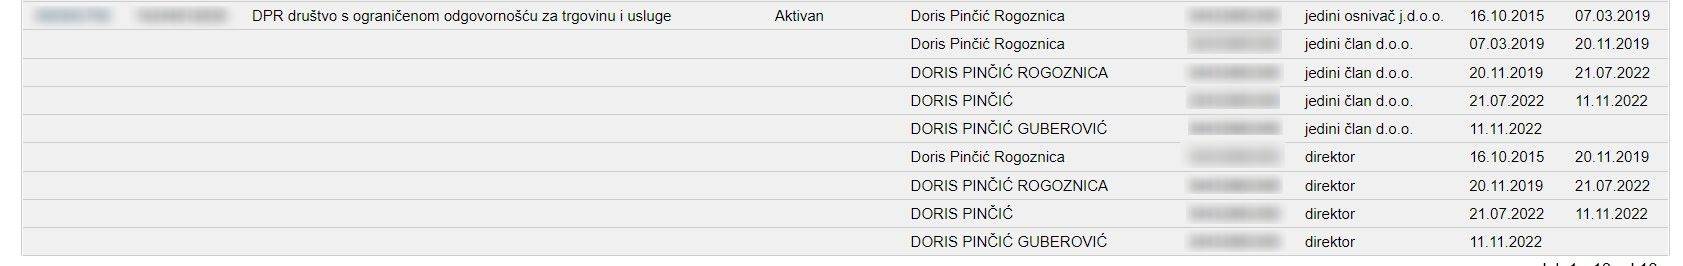 Doris Pinčić nadodala je muževo prezime na svoje